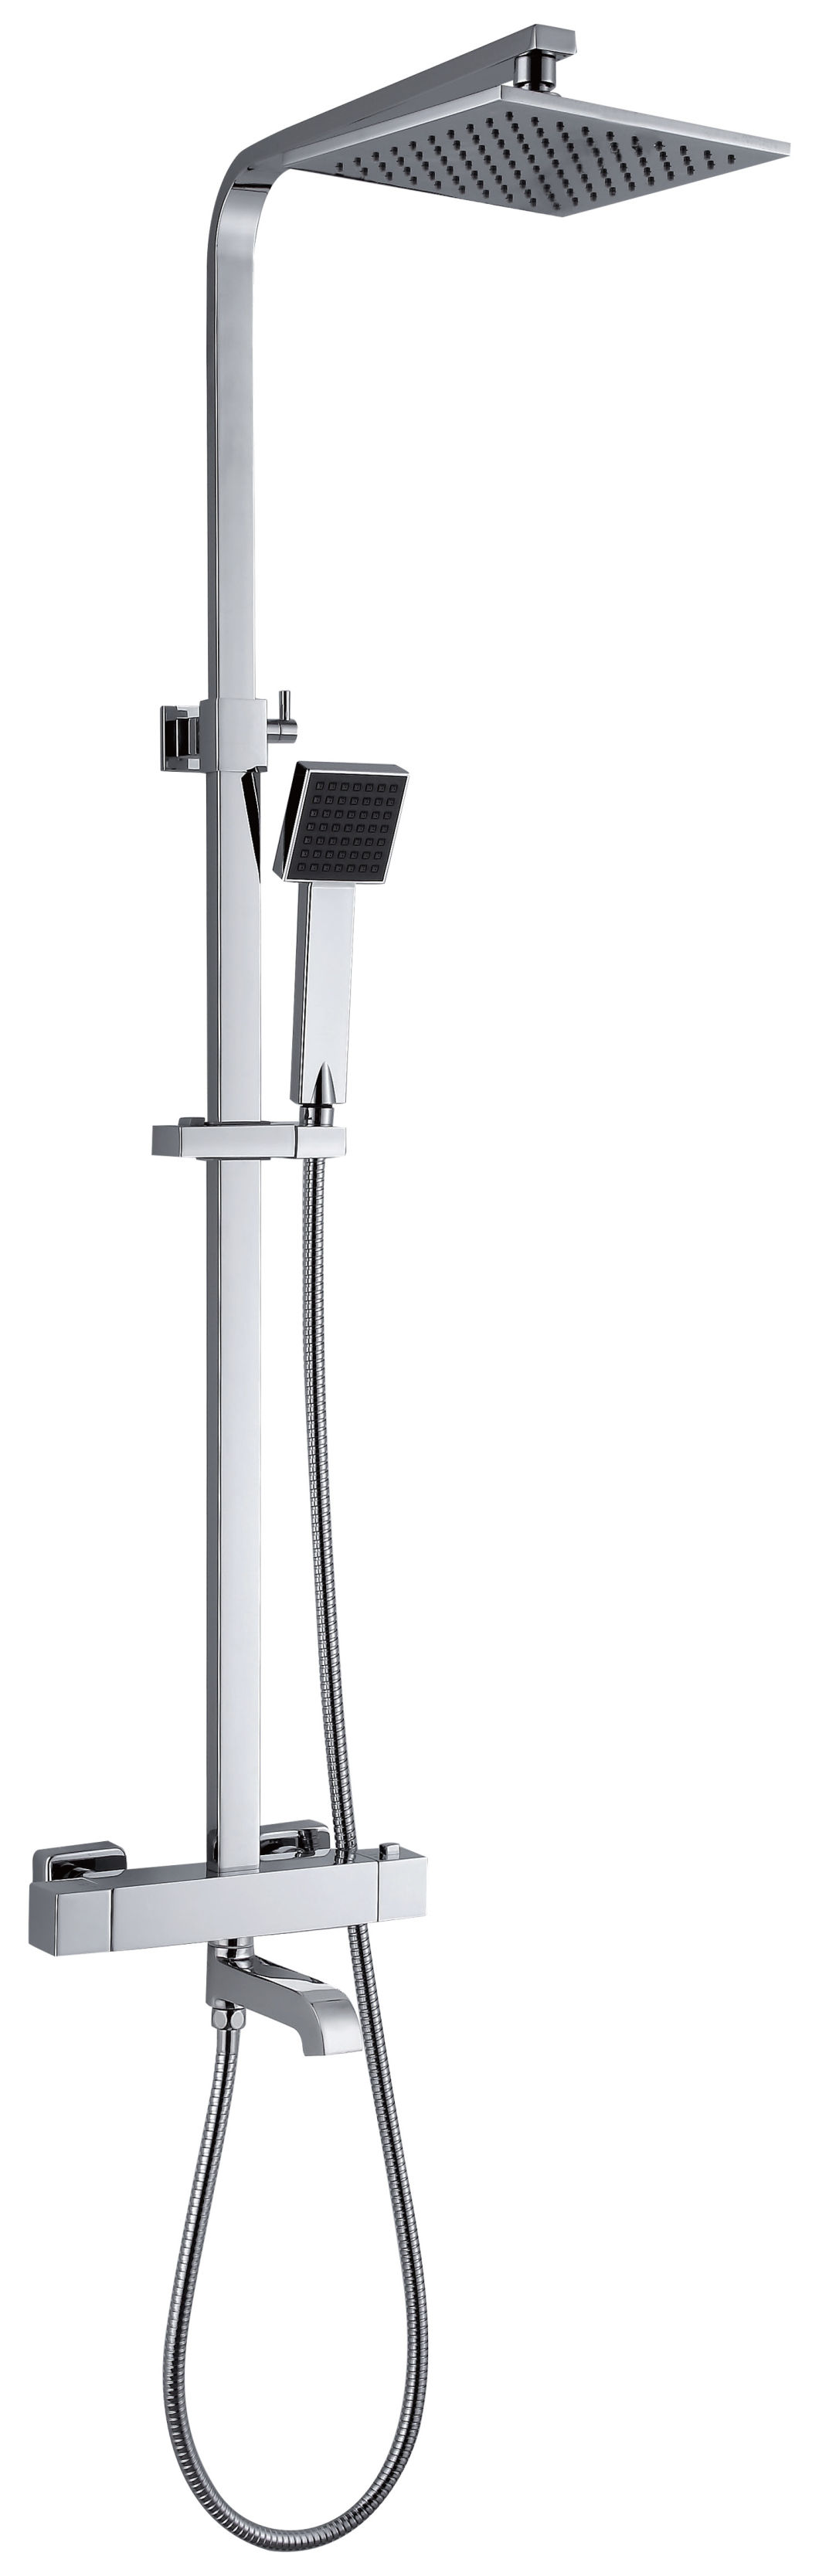 High Quality Constant Temperature Bathroom Shower Faucet Set (831001C)